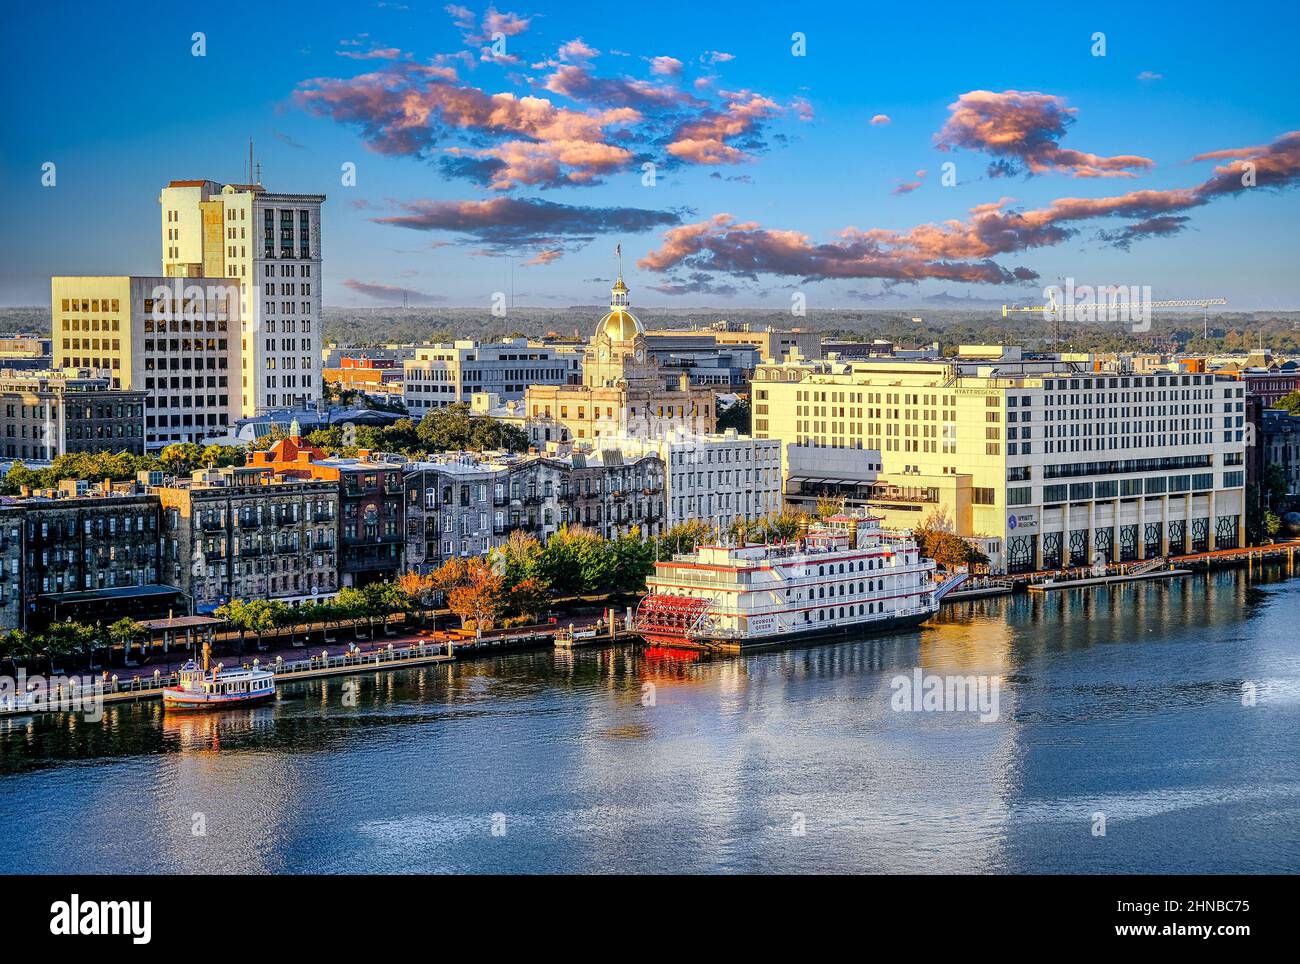 Savannah Riverfront at Dusk Stock Photo